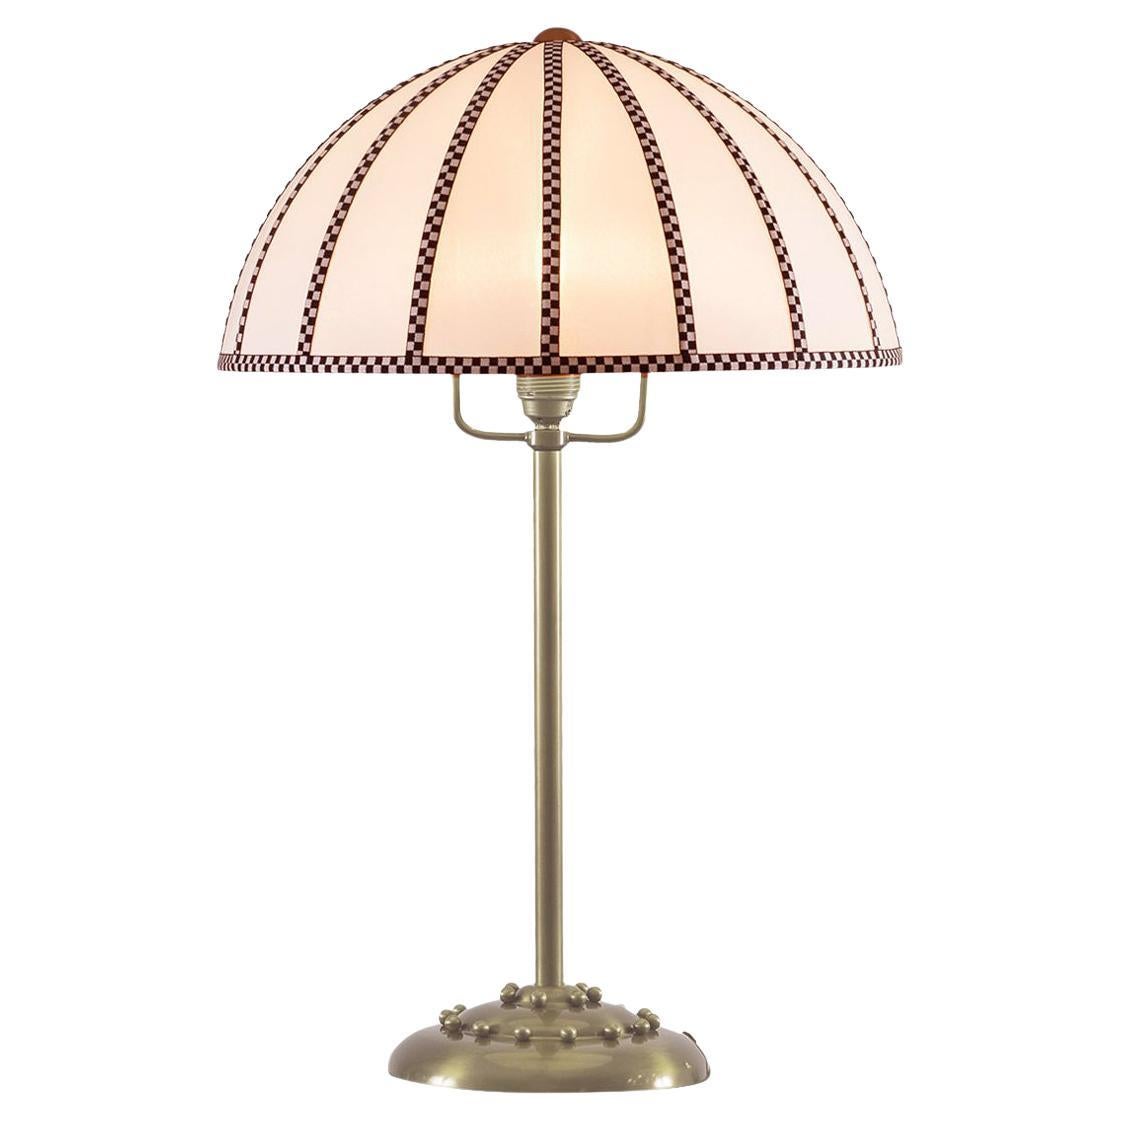 Josef Hoffmann Wiener Werkstätte Jugendstil Silk & Brass Table Lamp, Re-Edition For Sale